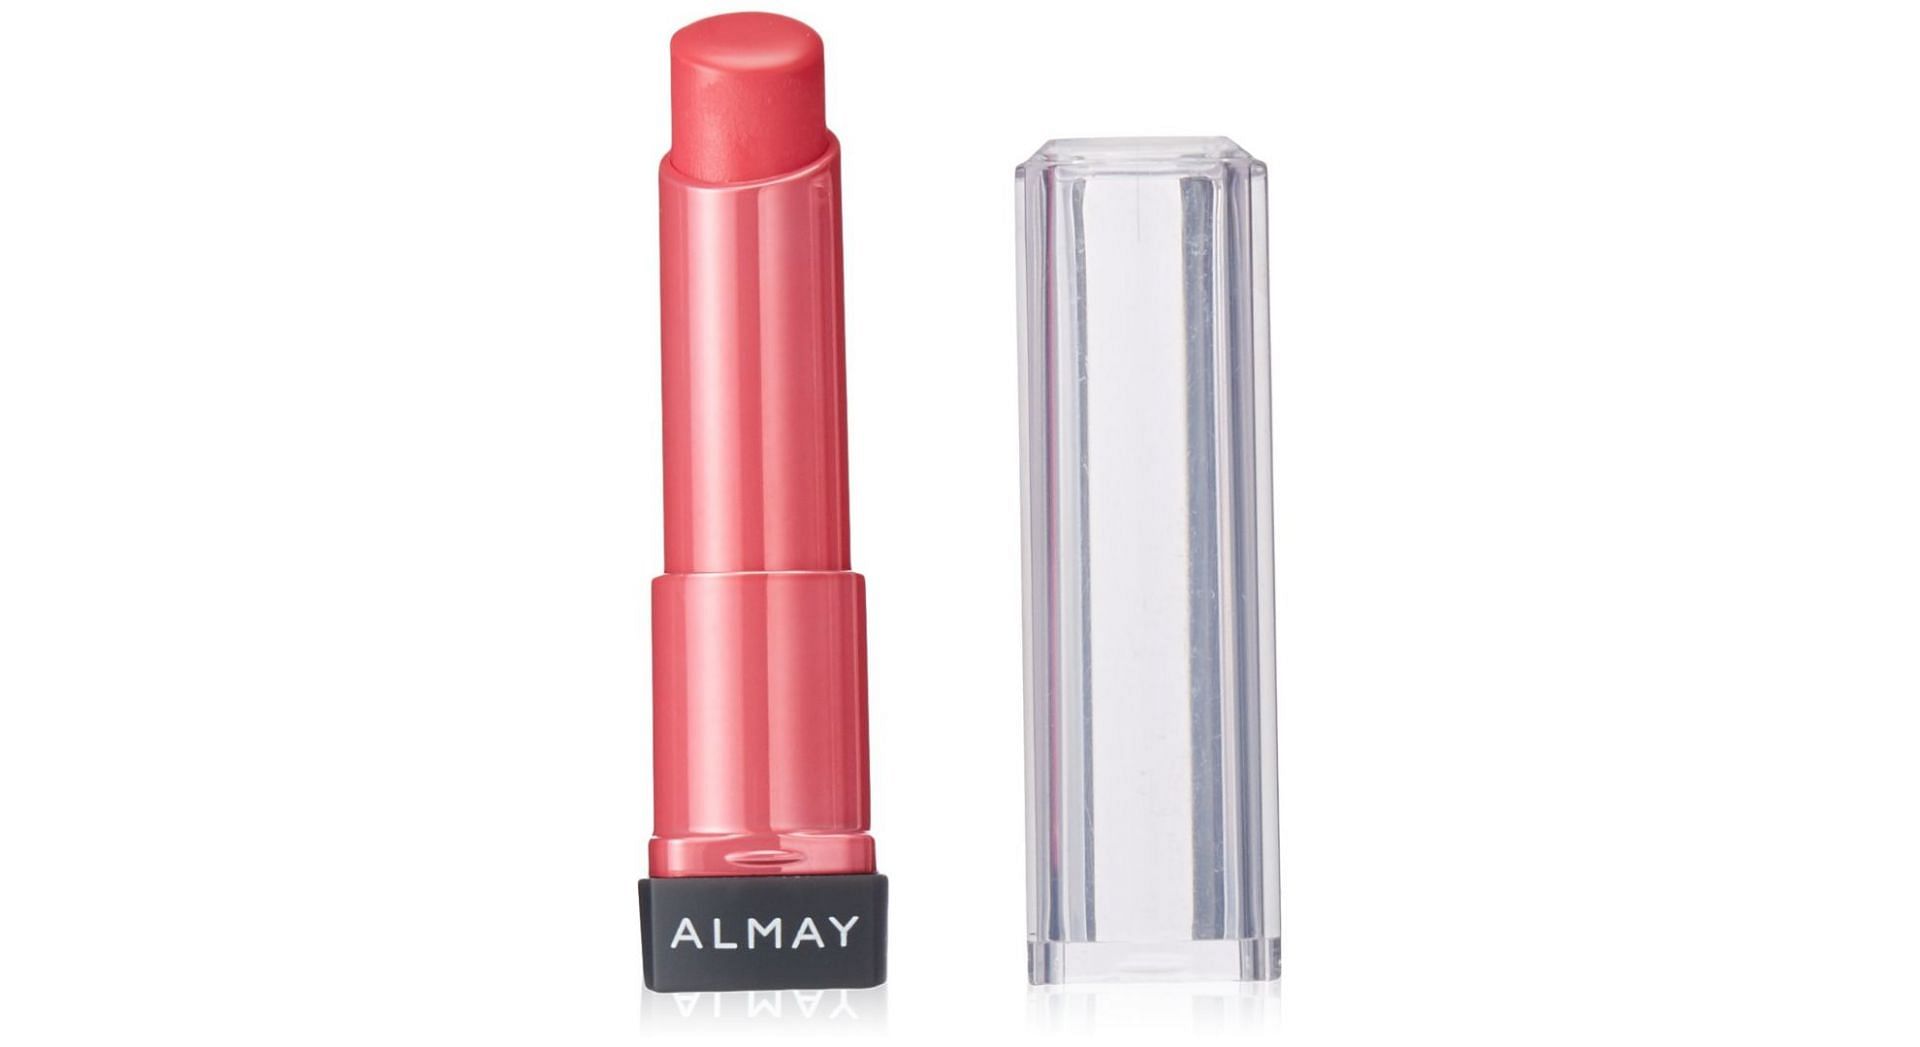 Almay Smart Shade Butter Kiss Lipstick- Pink-Light (Image via Amazon)